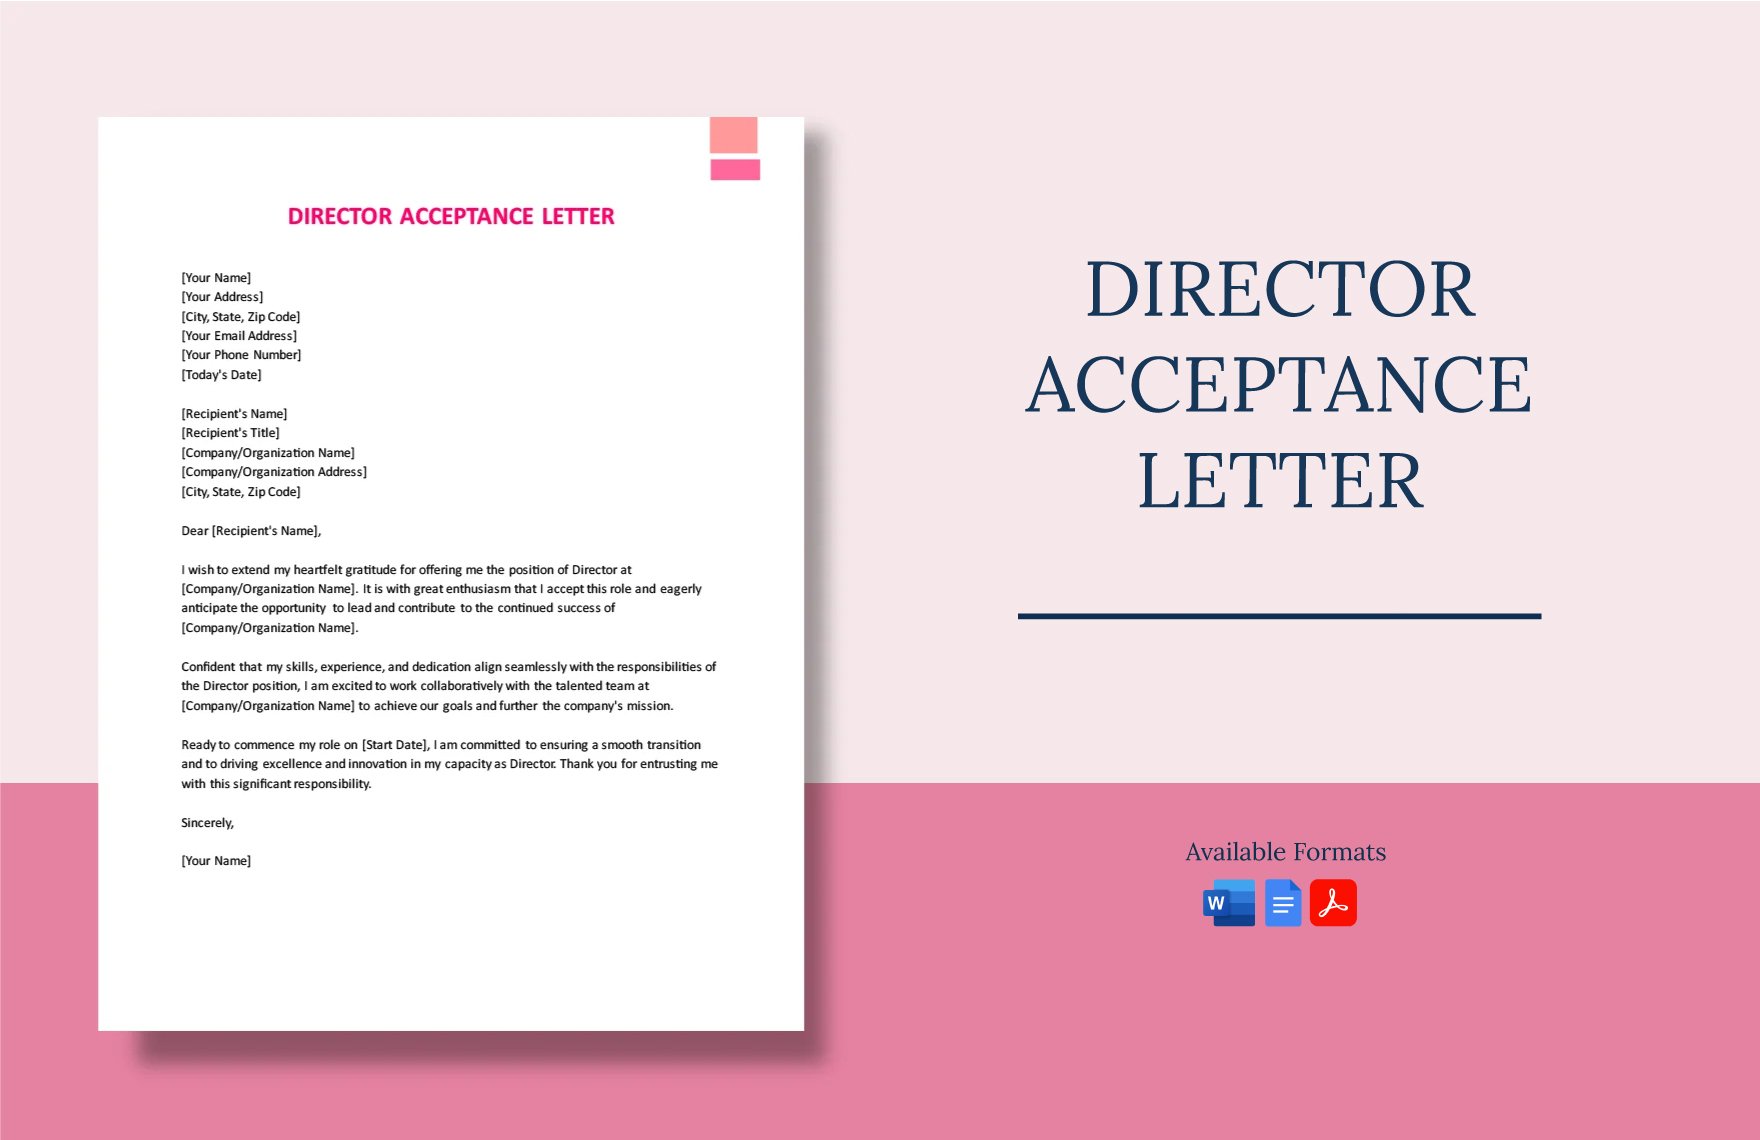 Director Acceptance Letter in Word, Google Docs, PDF